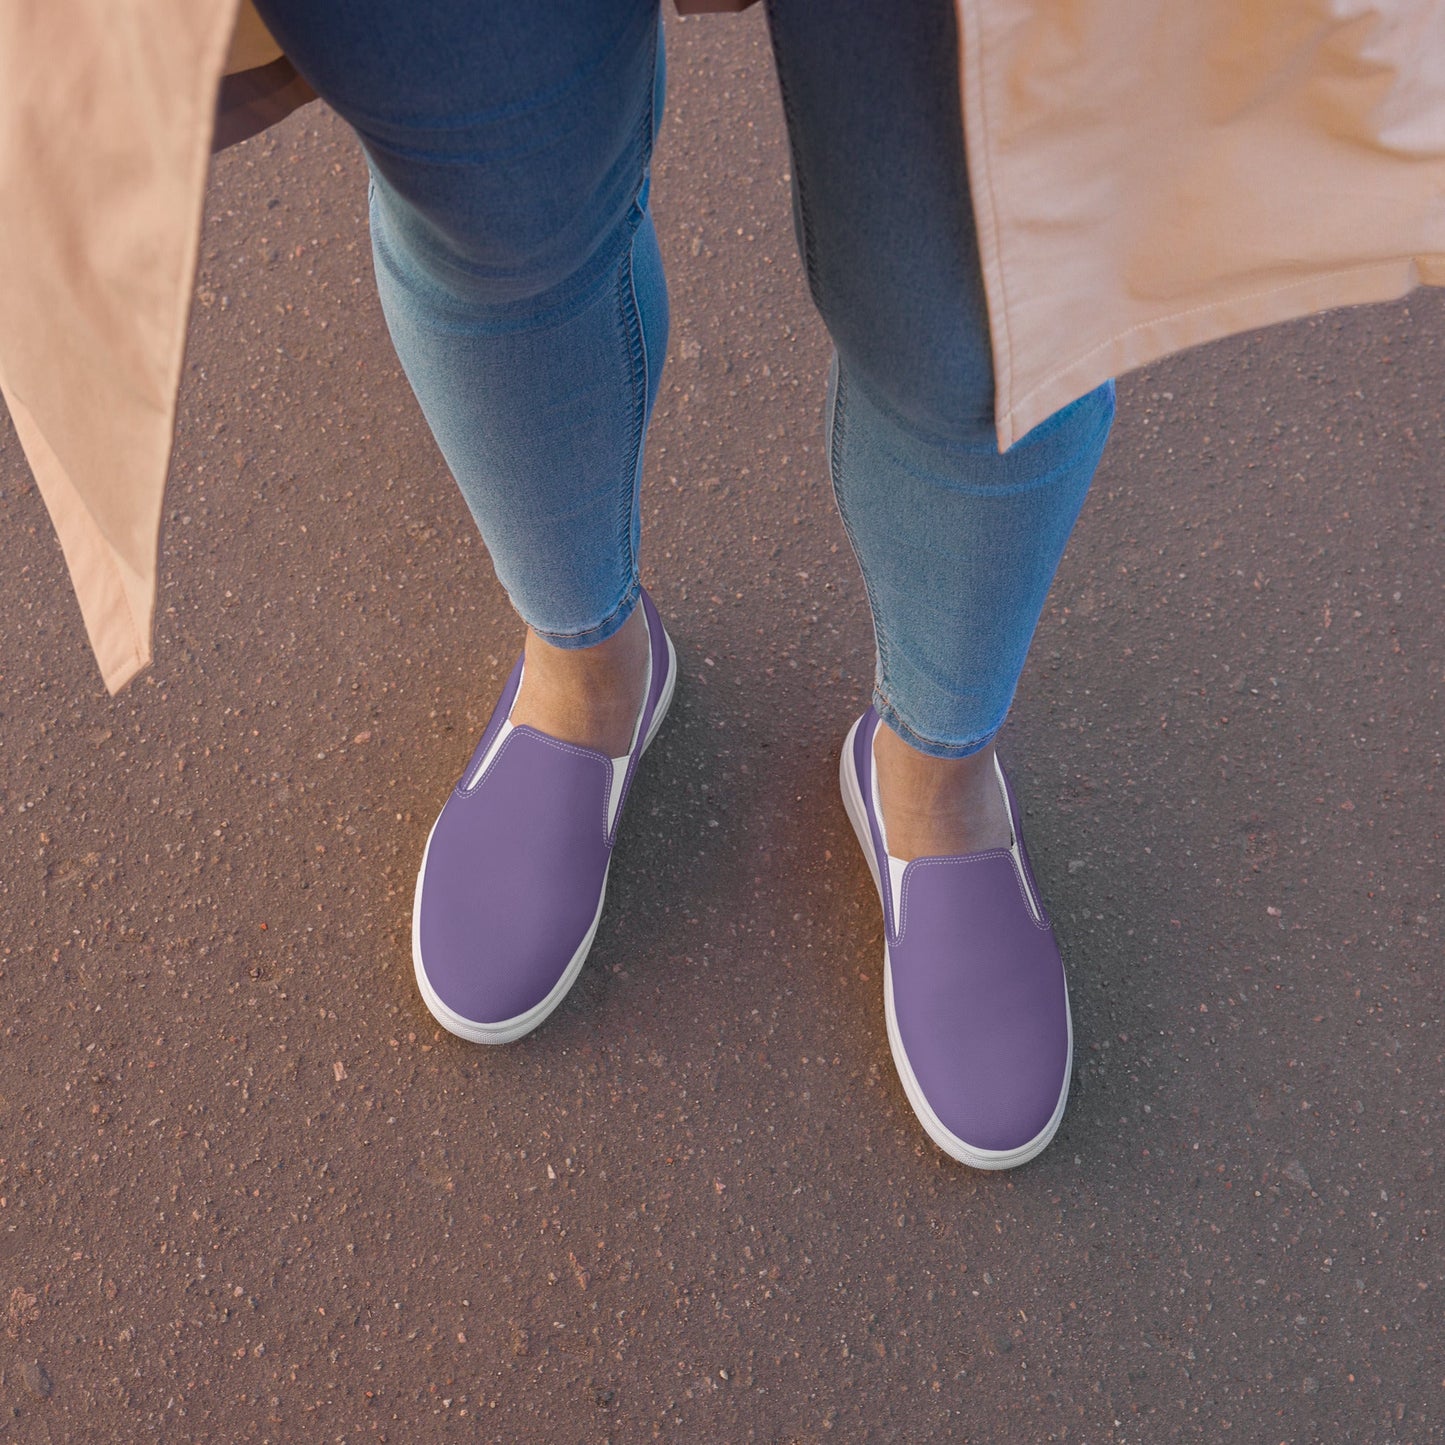 klasneakers Women’s slip-on canvas shoes - Purple